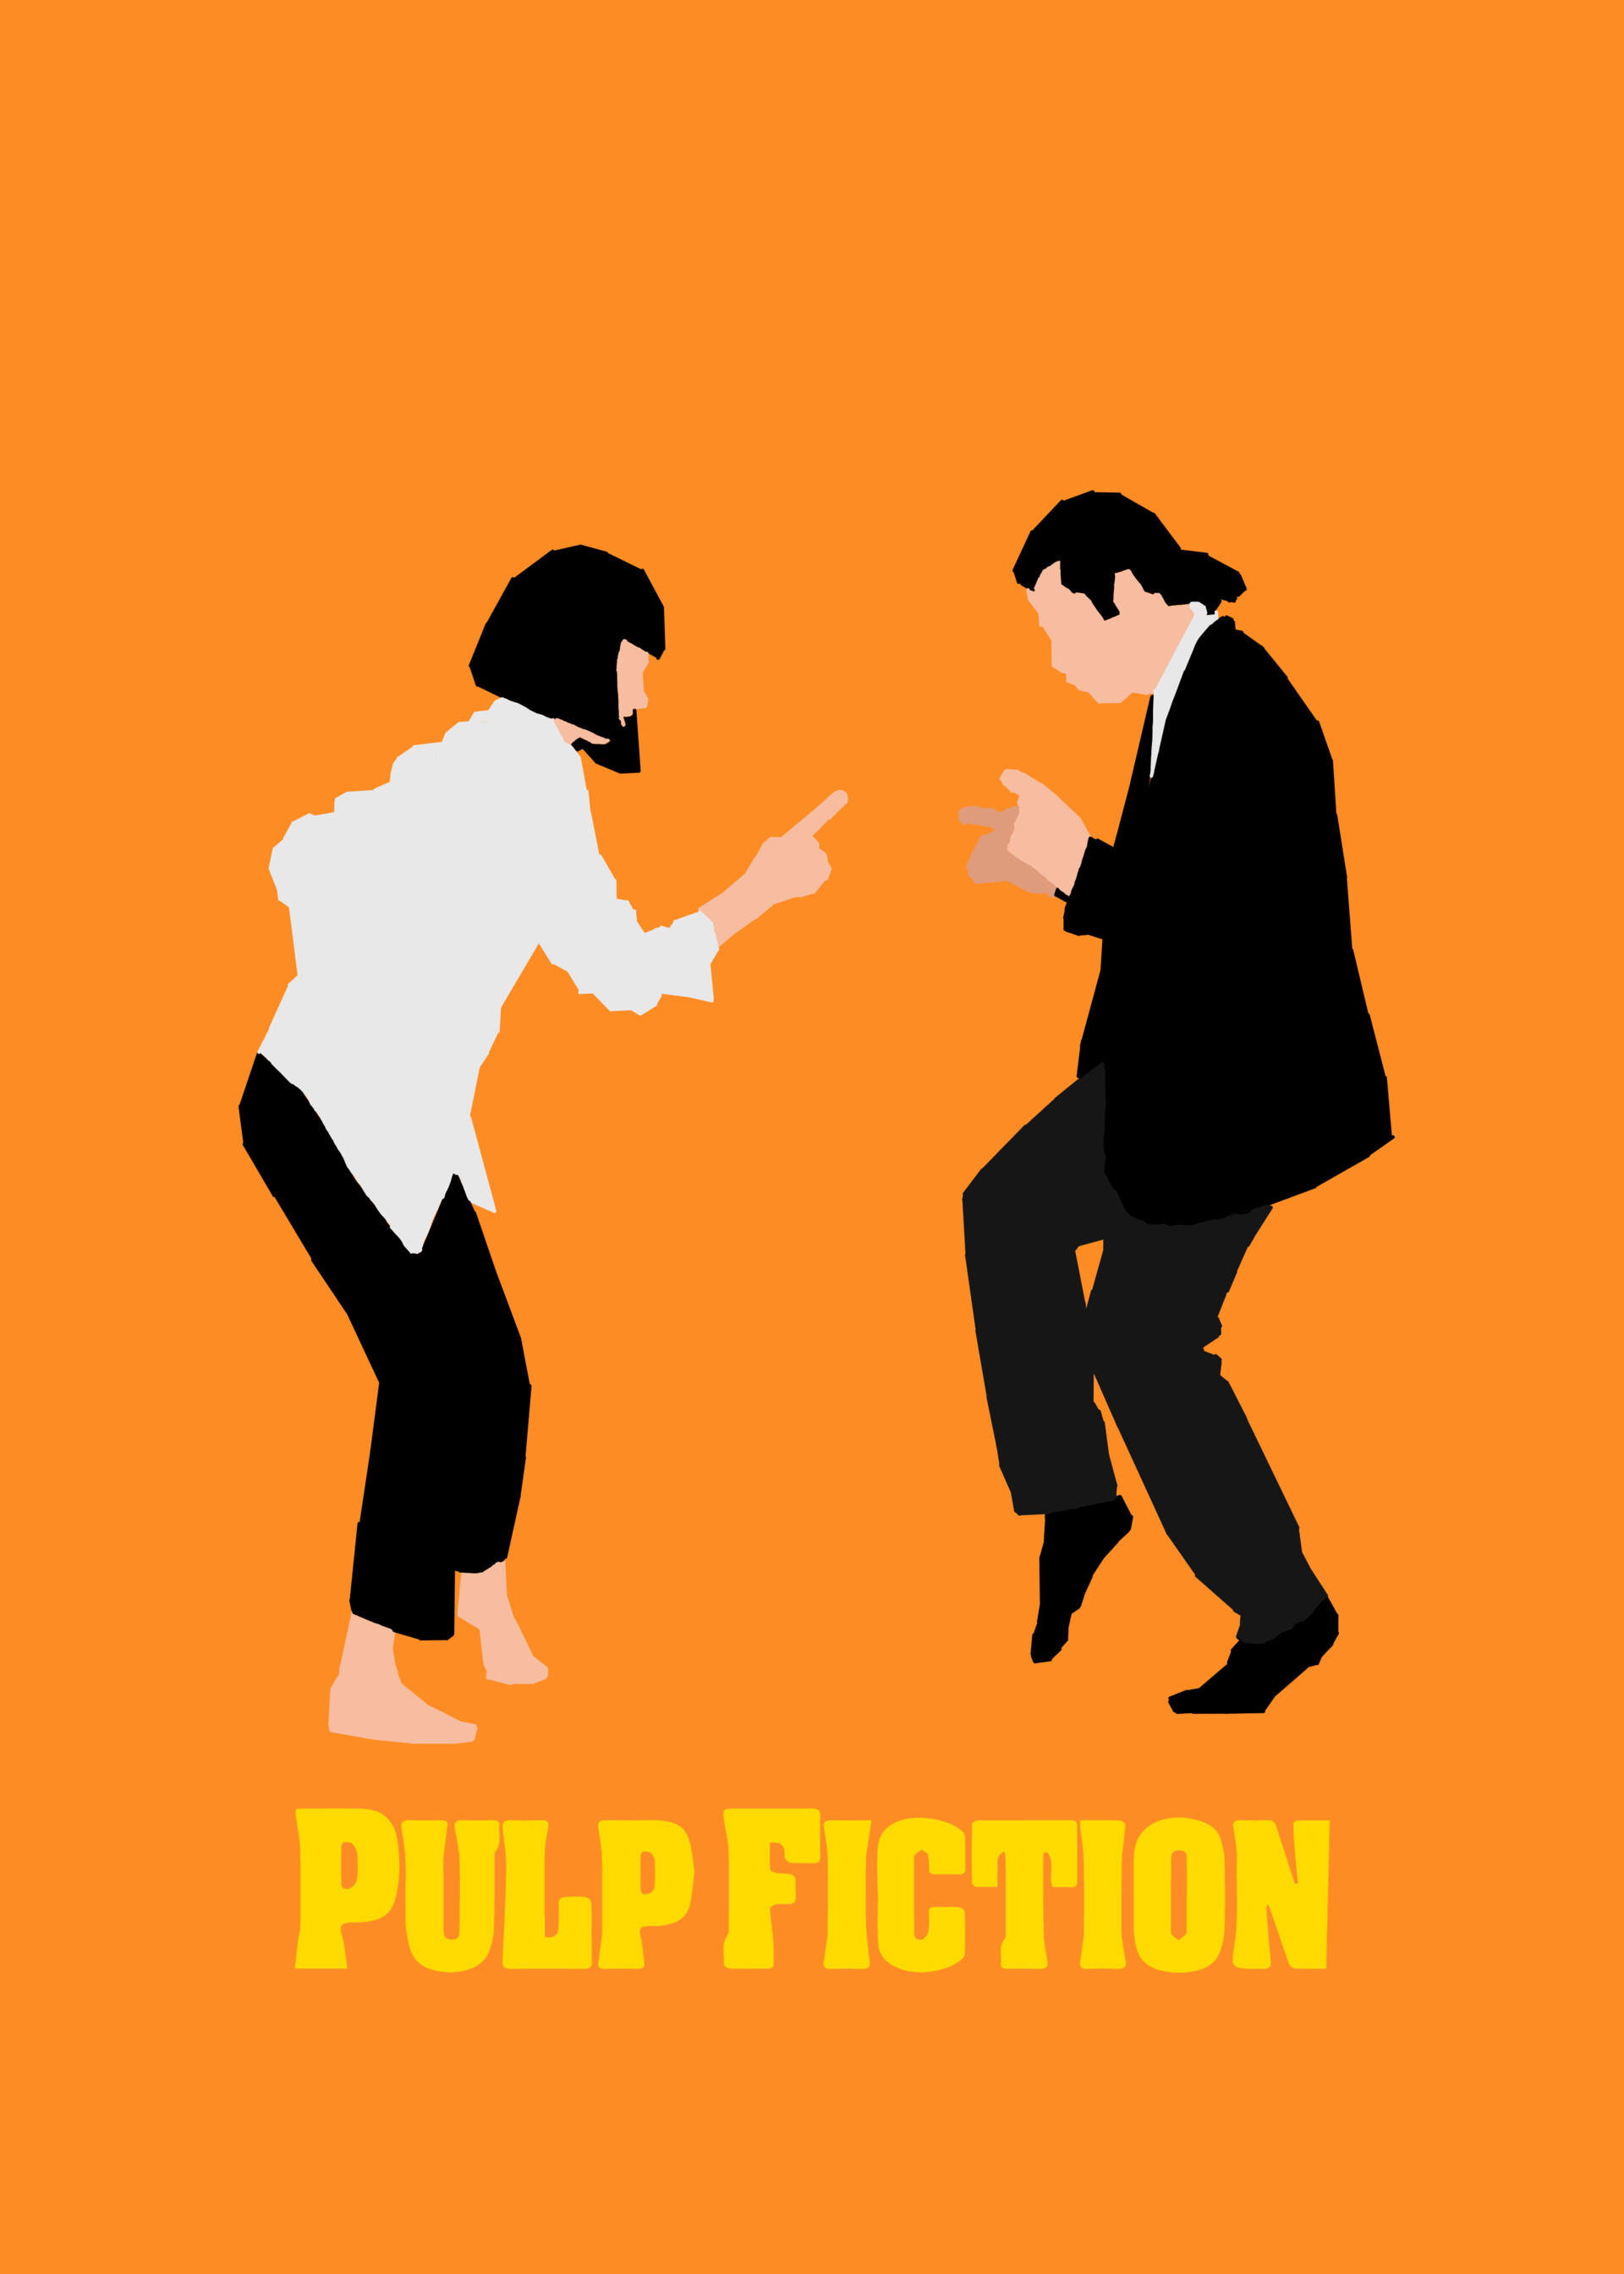 ArtStation - Pulp Fiction - minimalist poster